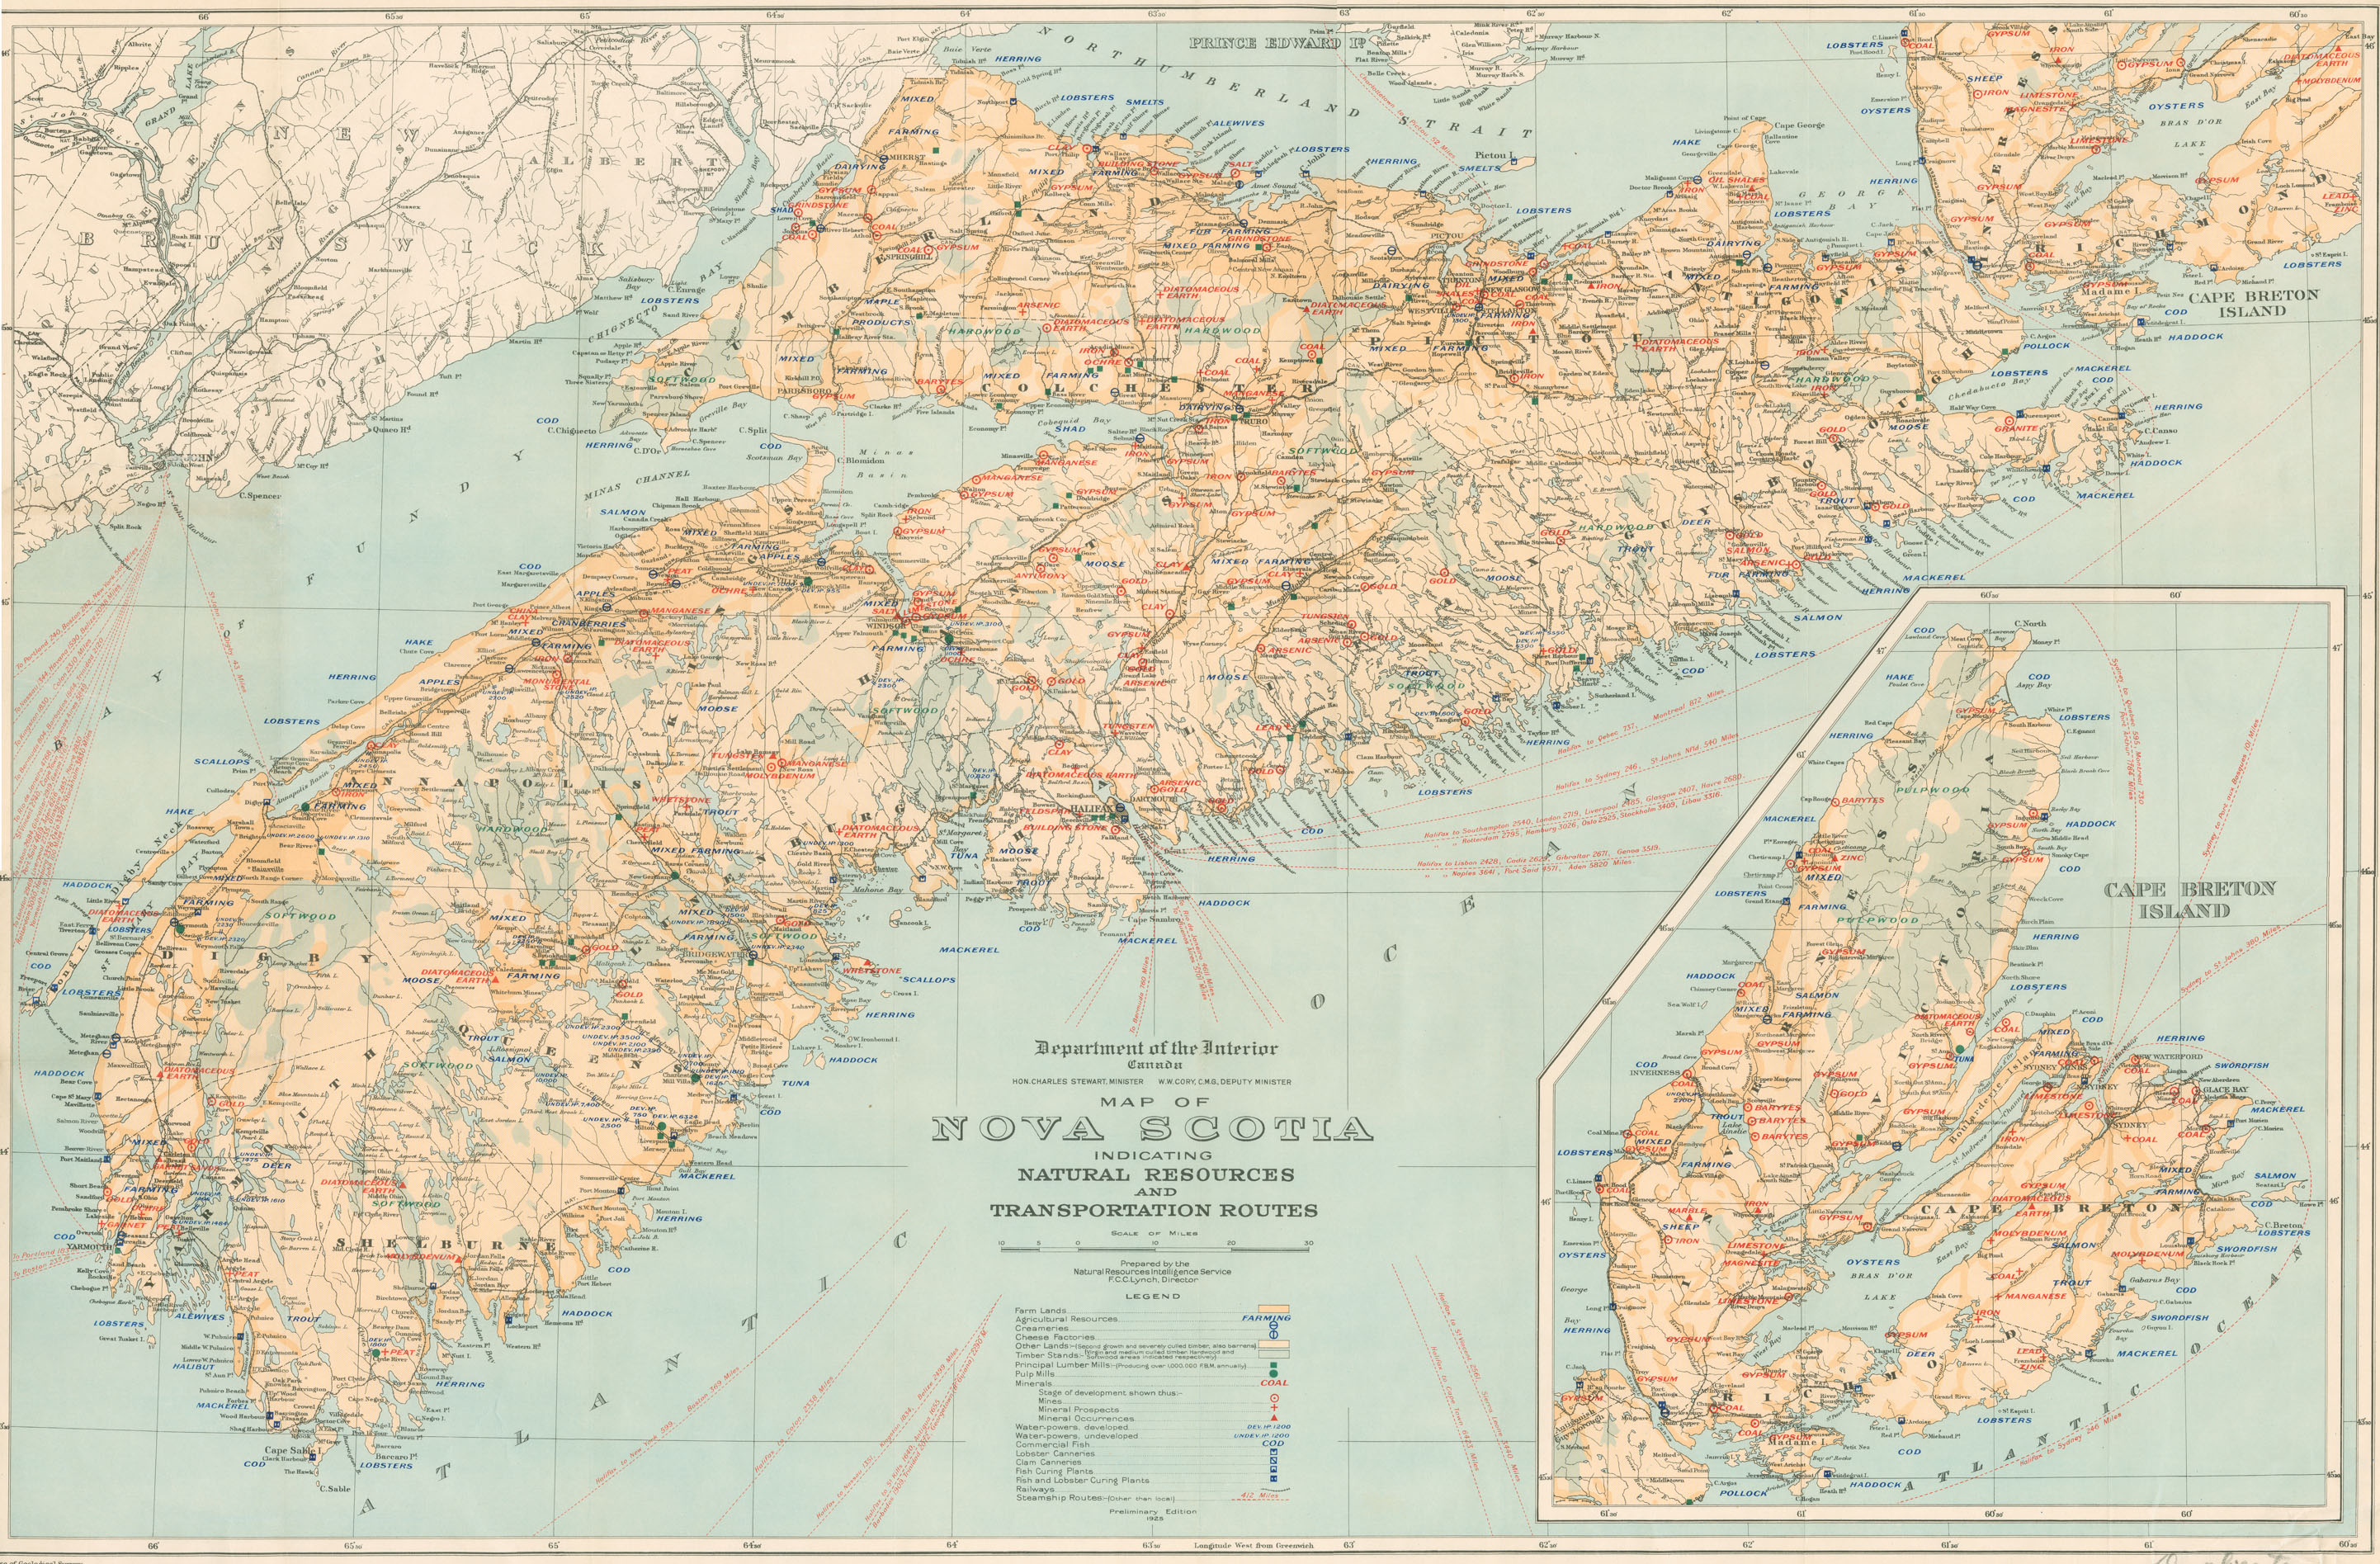 <i>Map of Nova Scotia Indicating Natural Resources and Transportation Routes</i>